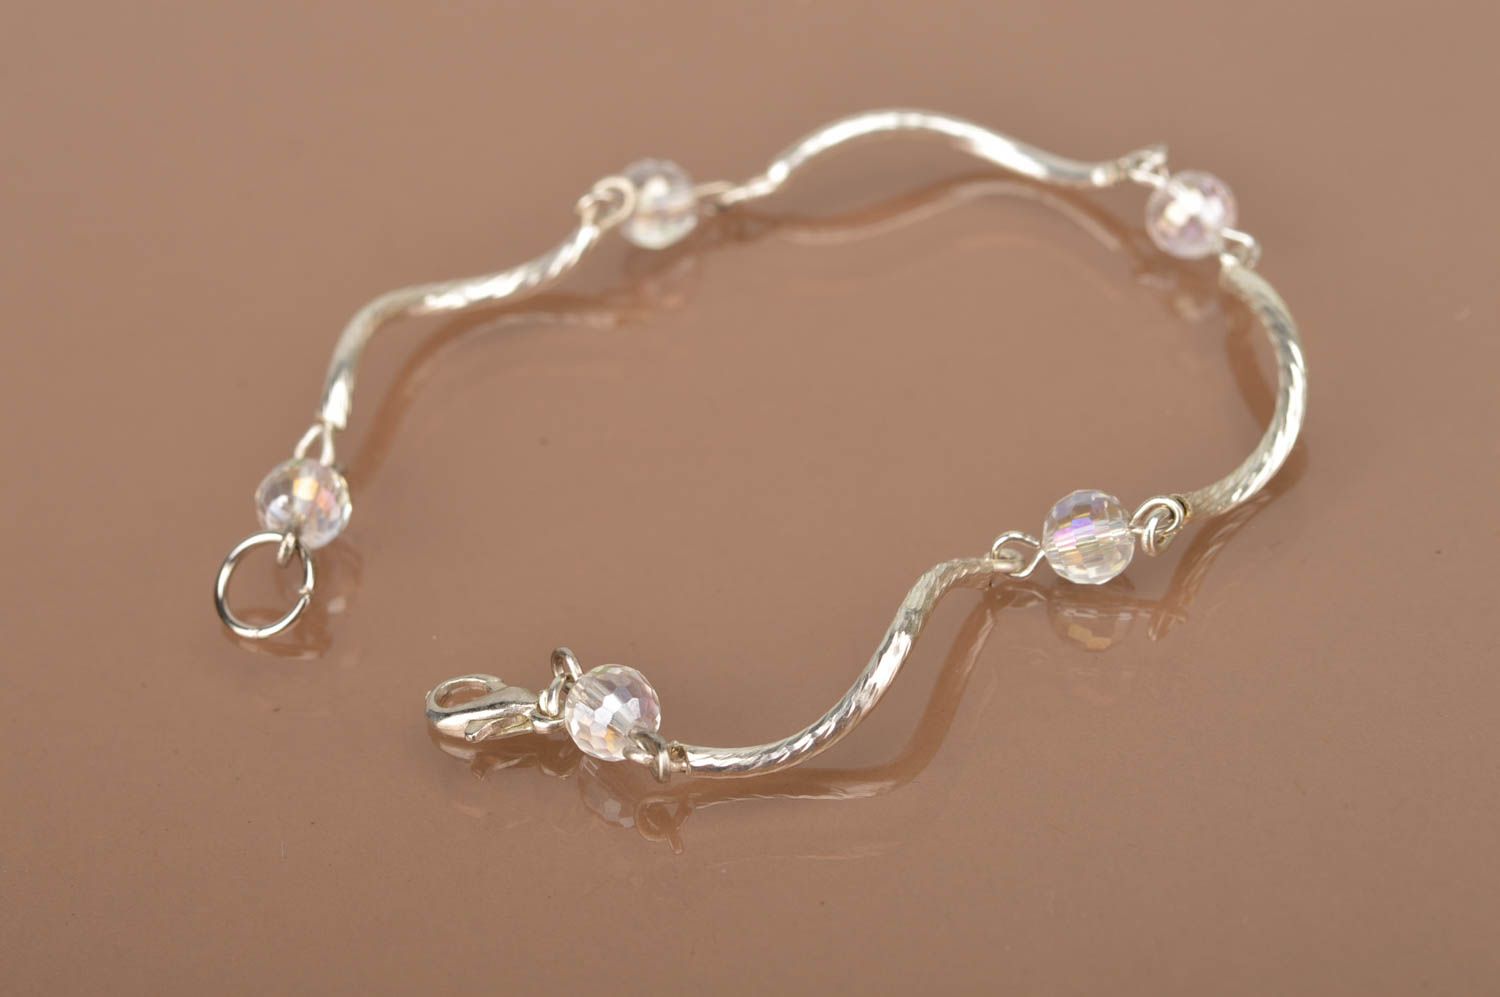 Handmade metal bracelet unusual wrist bracelet with crystal beads jewelry design photo 4